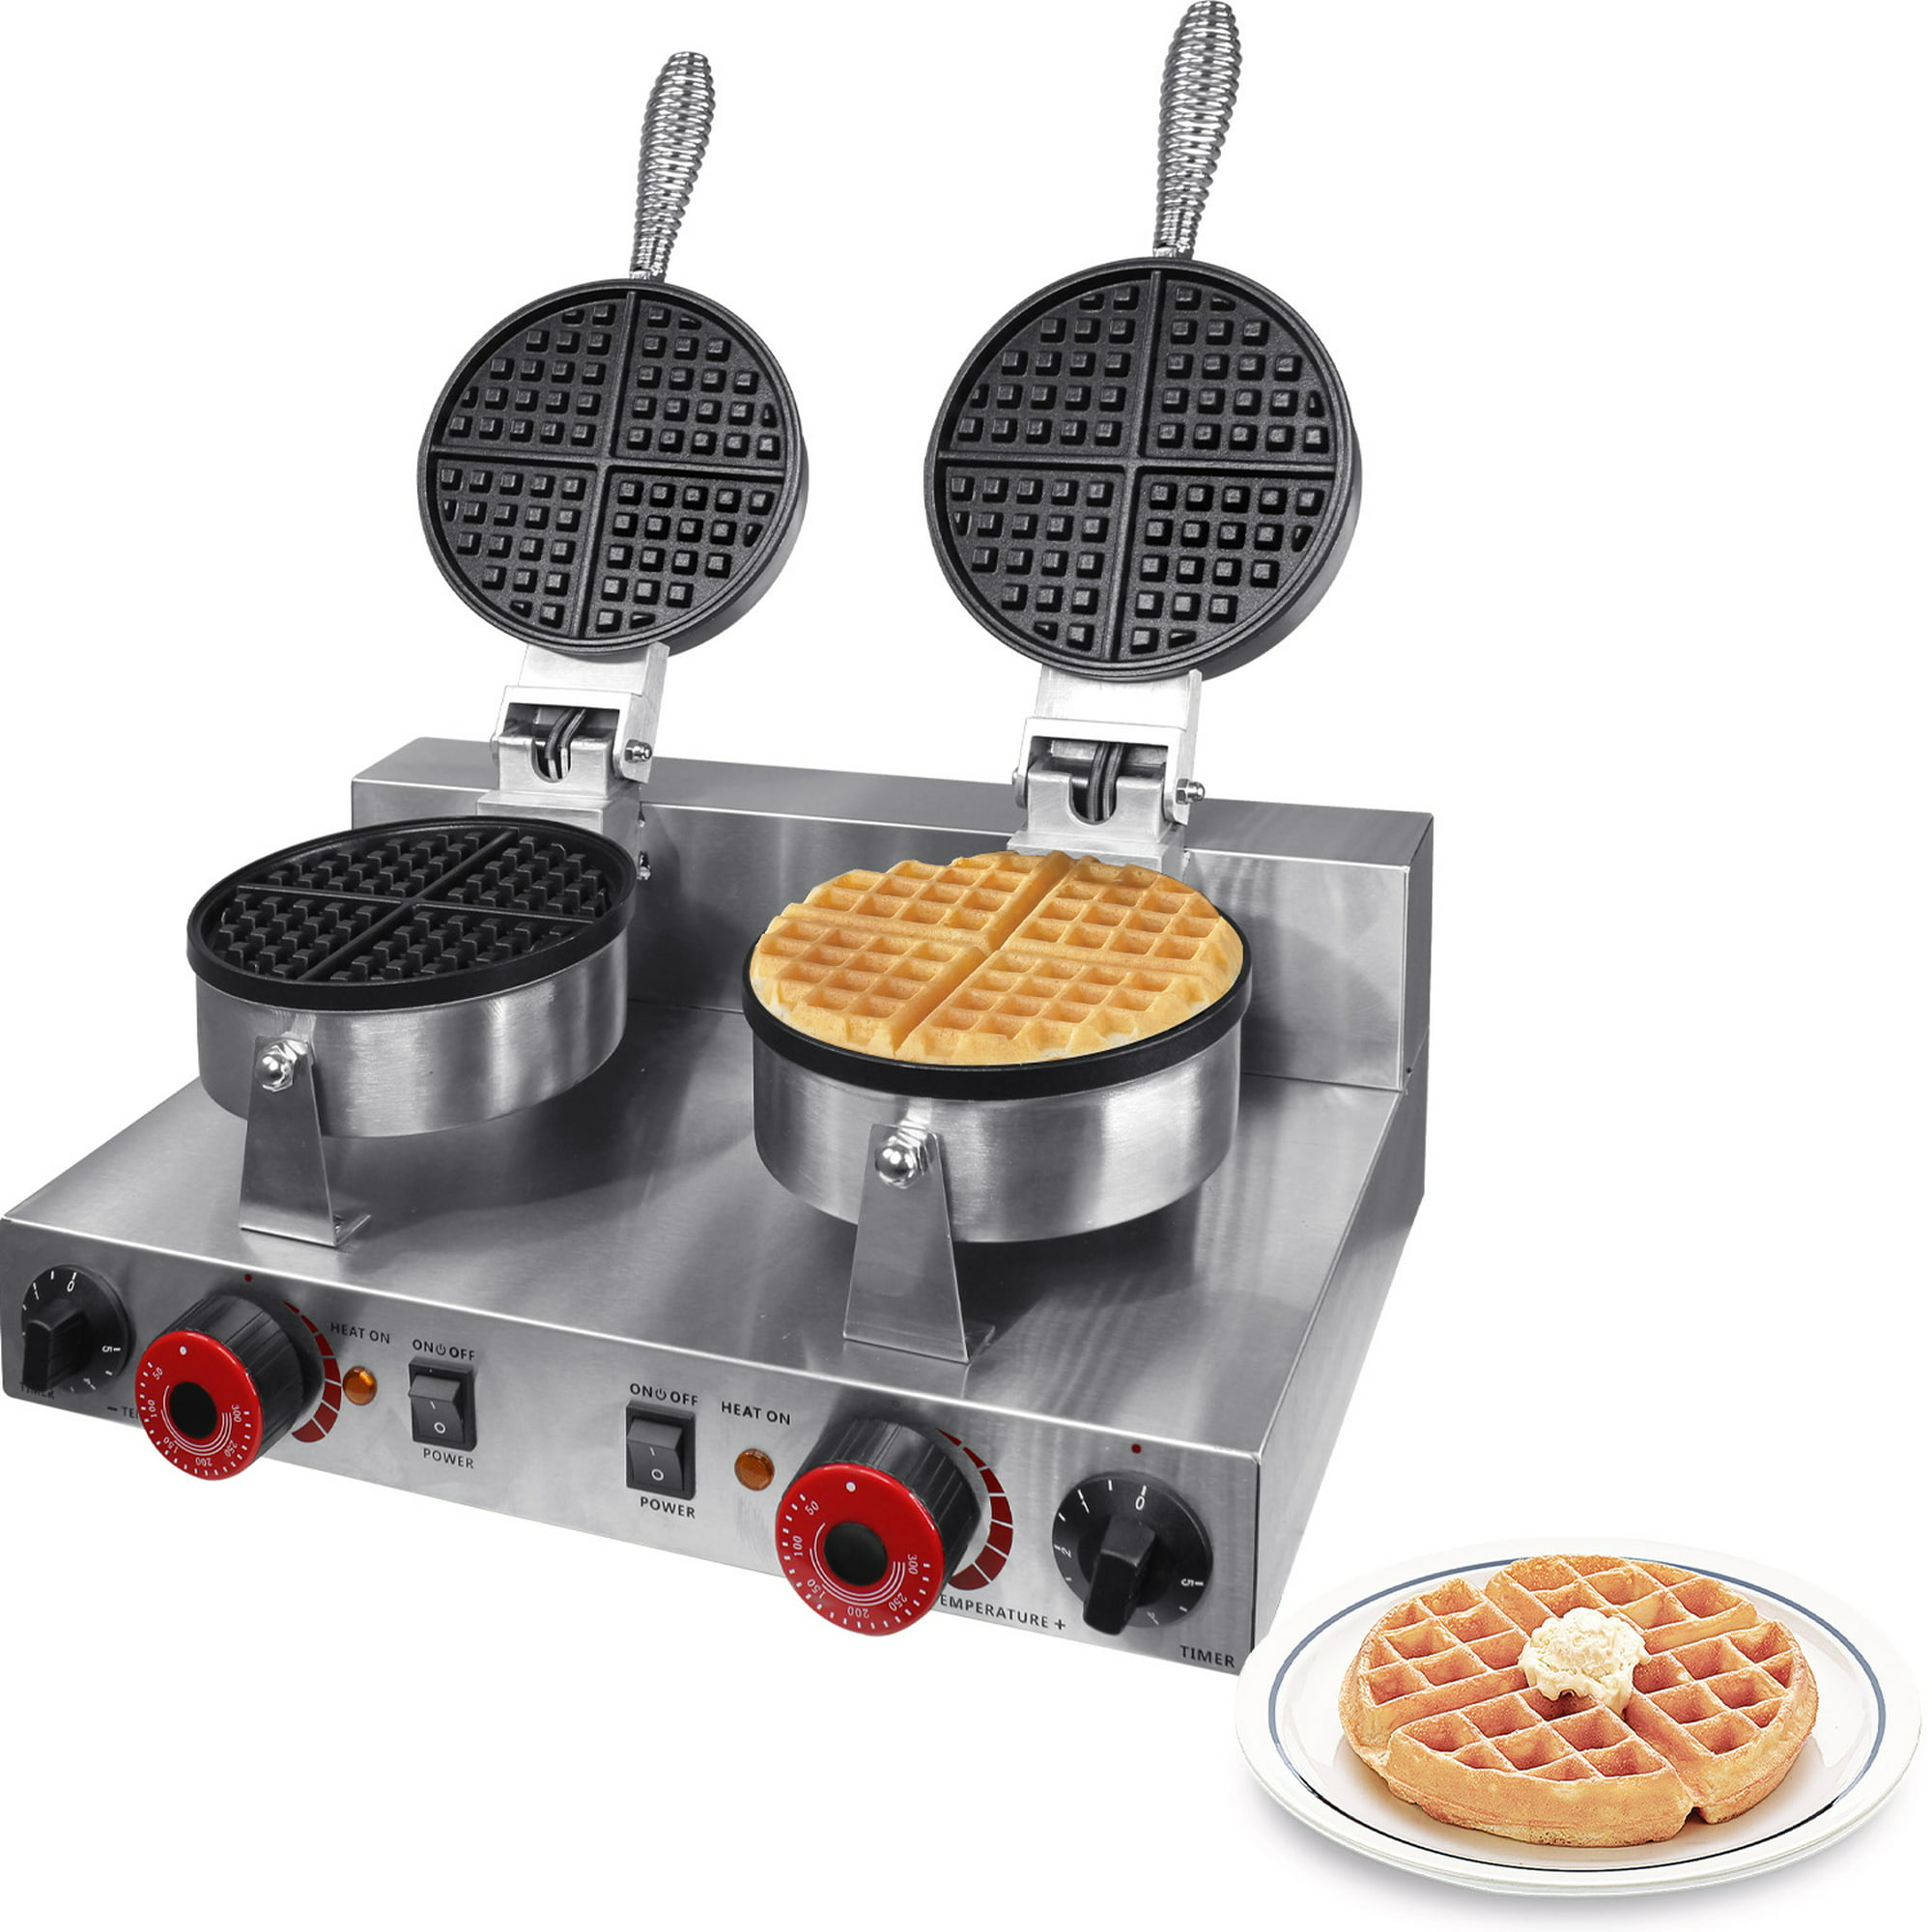 Waflera Electrica Redonda Gofrera Belga Sandwichera Maquina Hacer Waffles  Mini